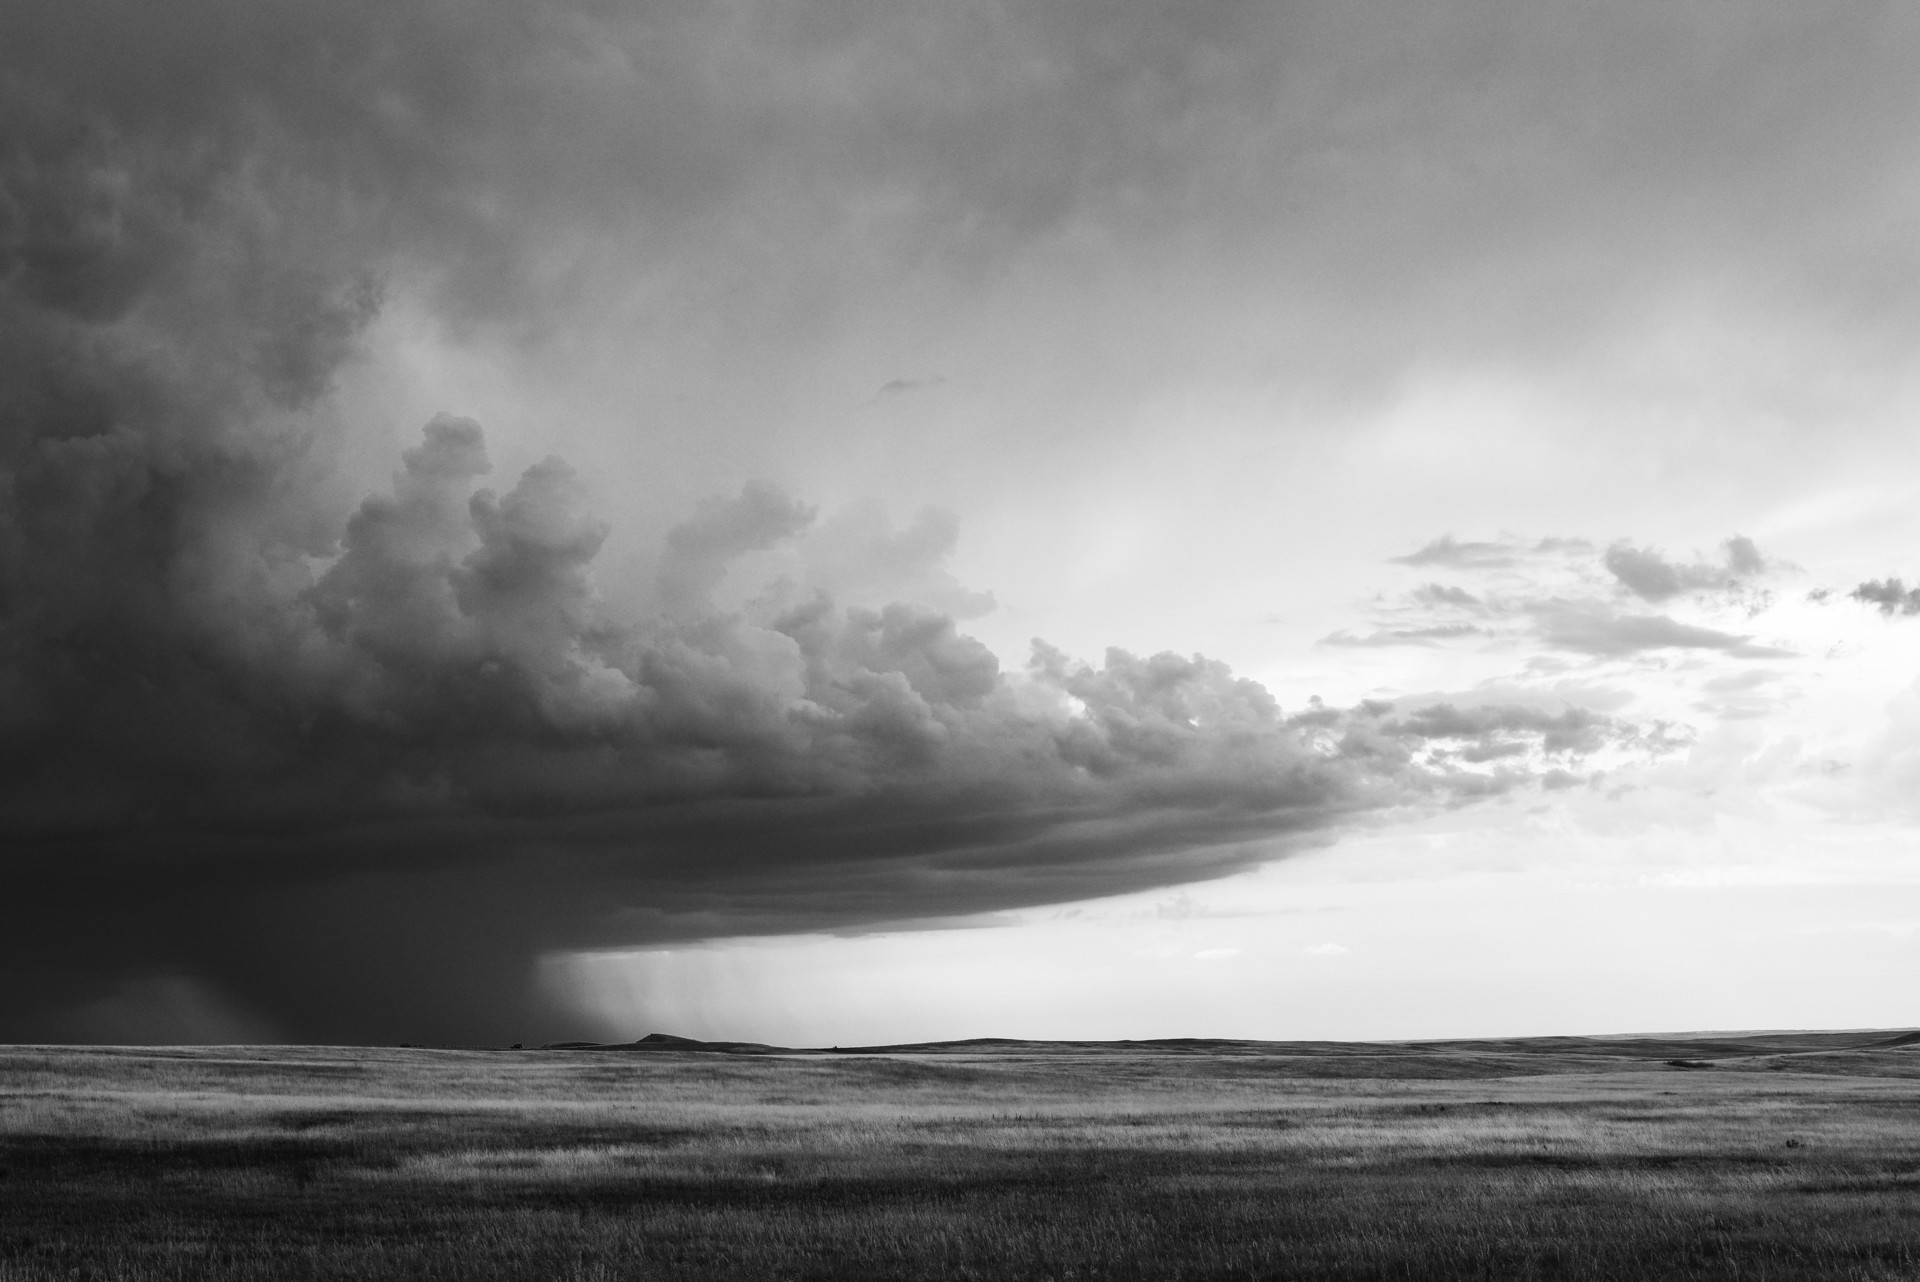 Approaching Storm by John P. Moench